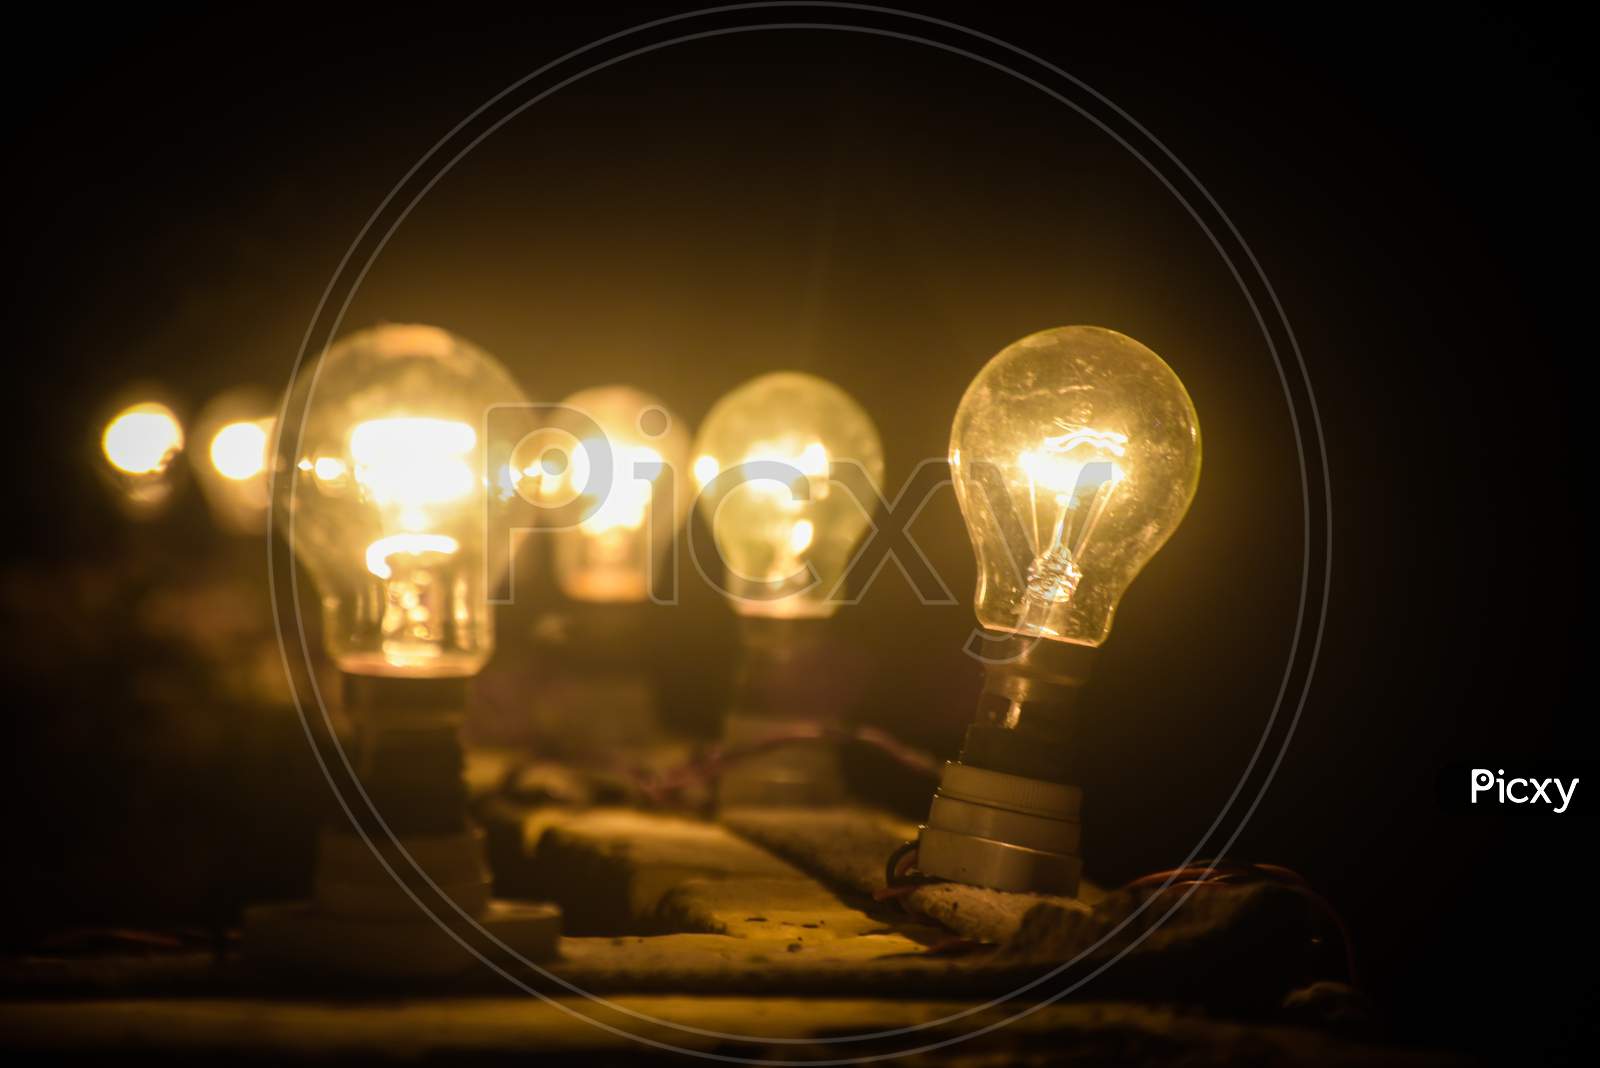 light bulbs on black background